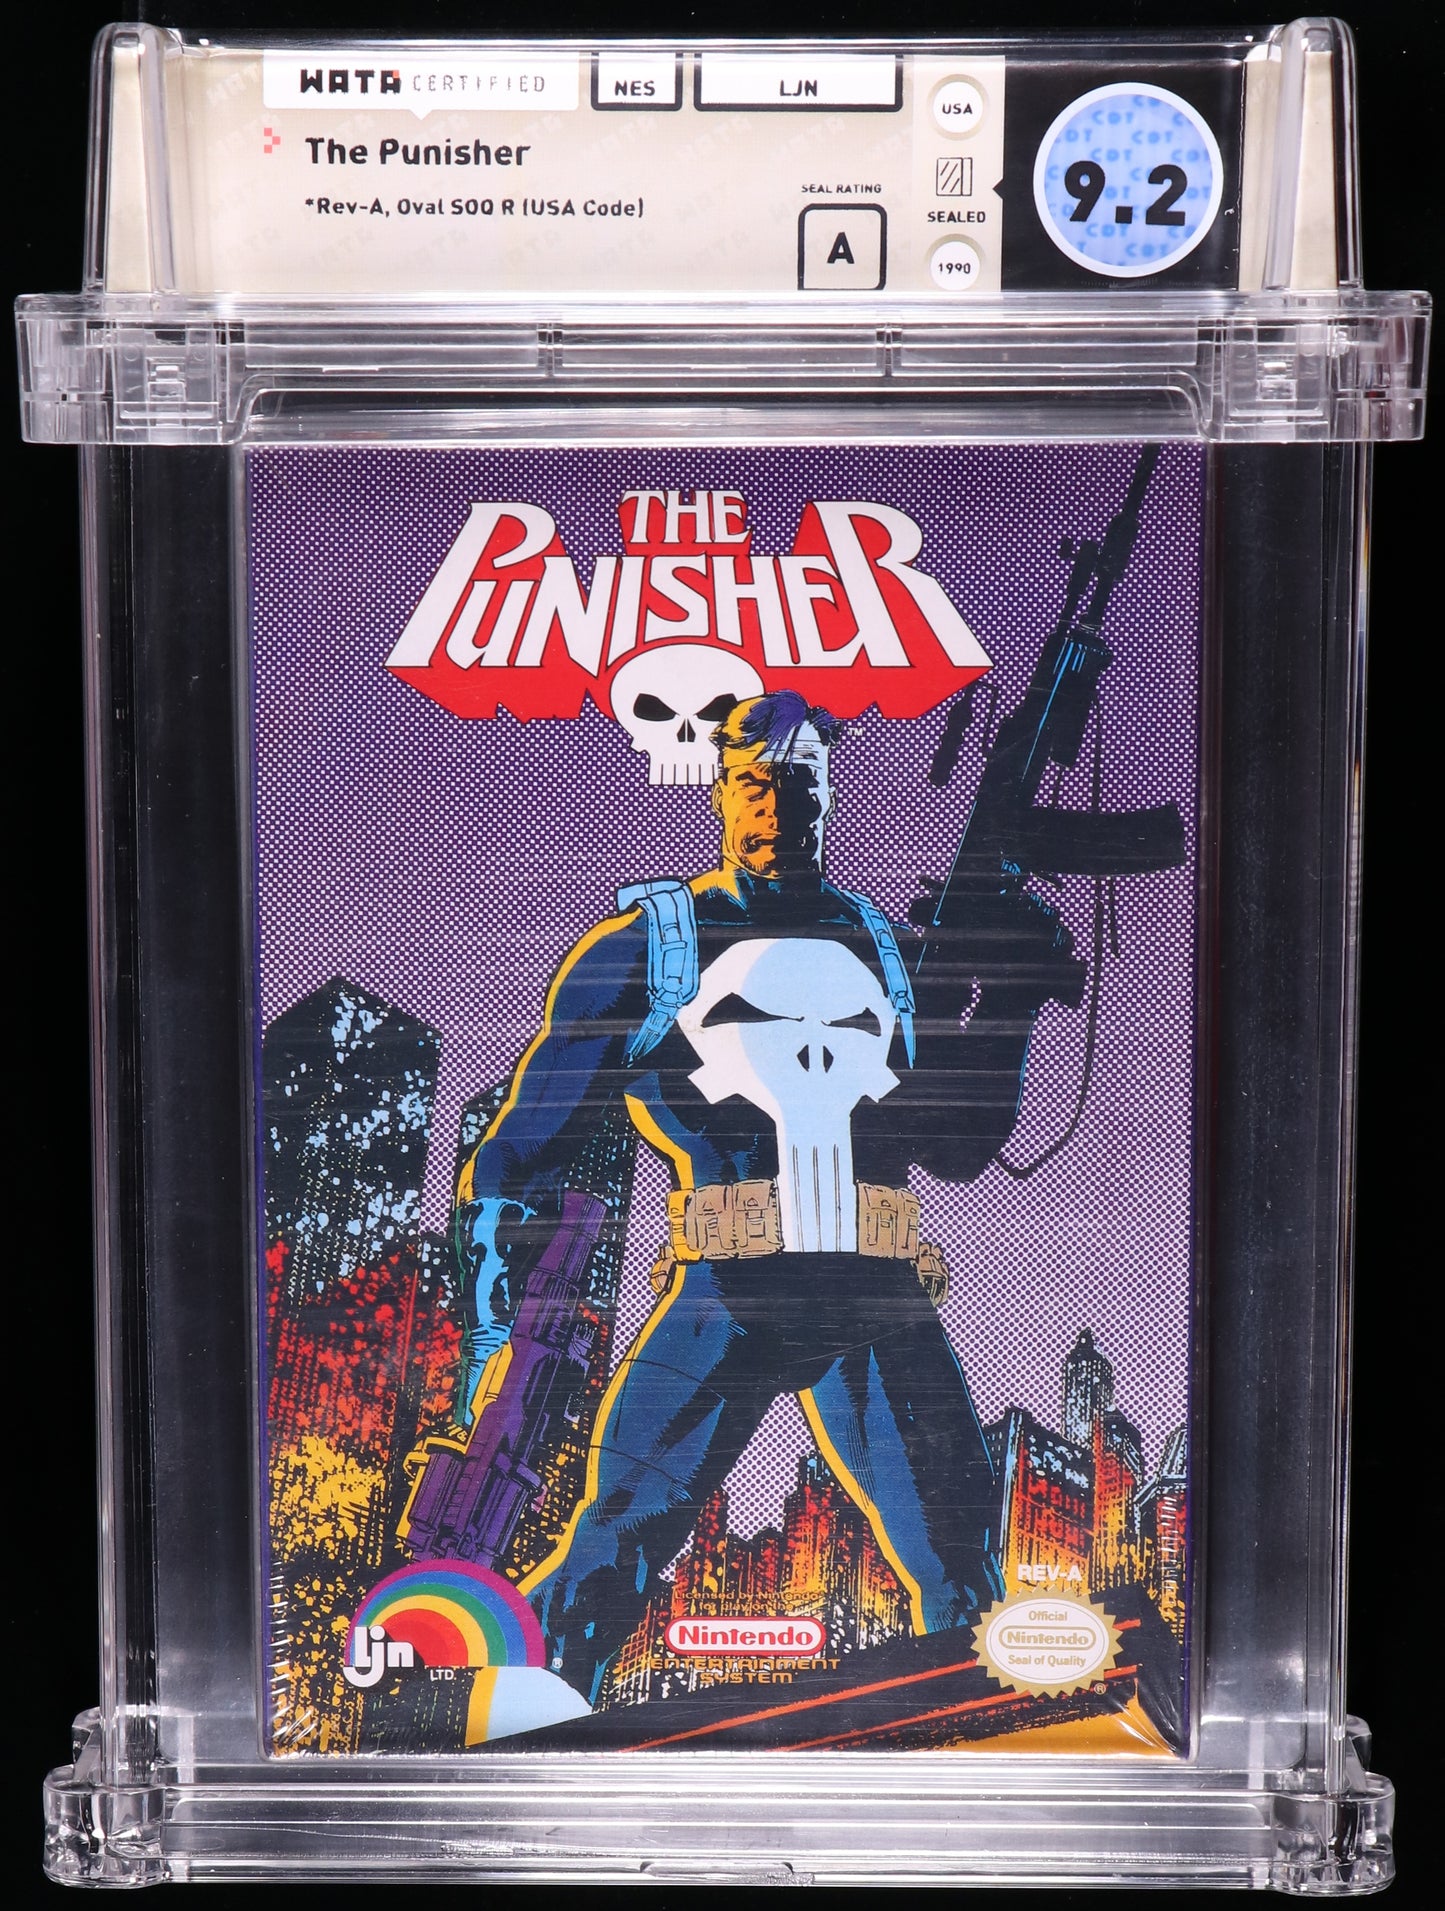 The Punisher [Graded WATA 9.2] (Nintendo NES)